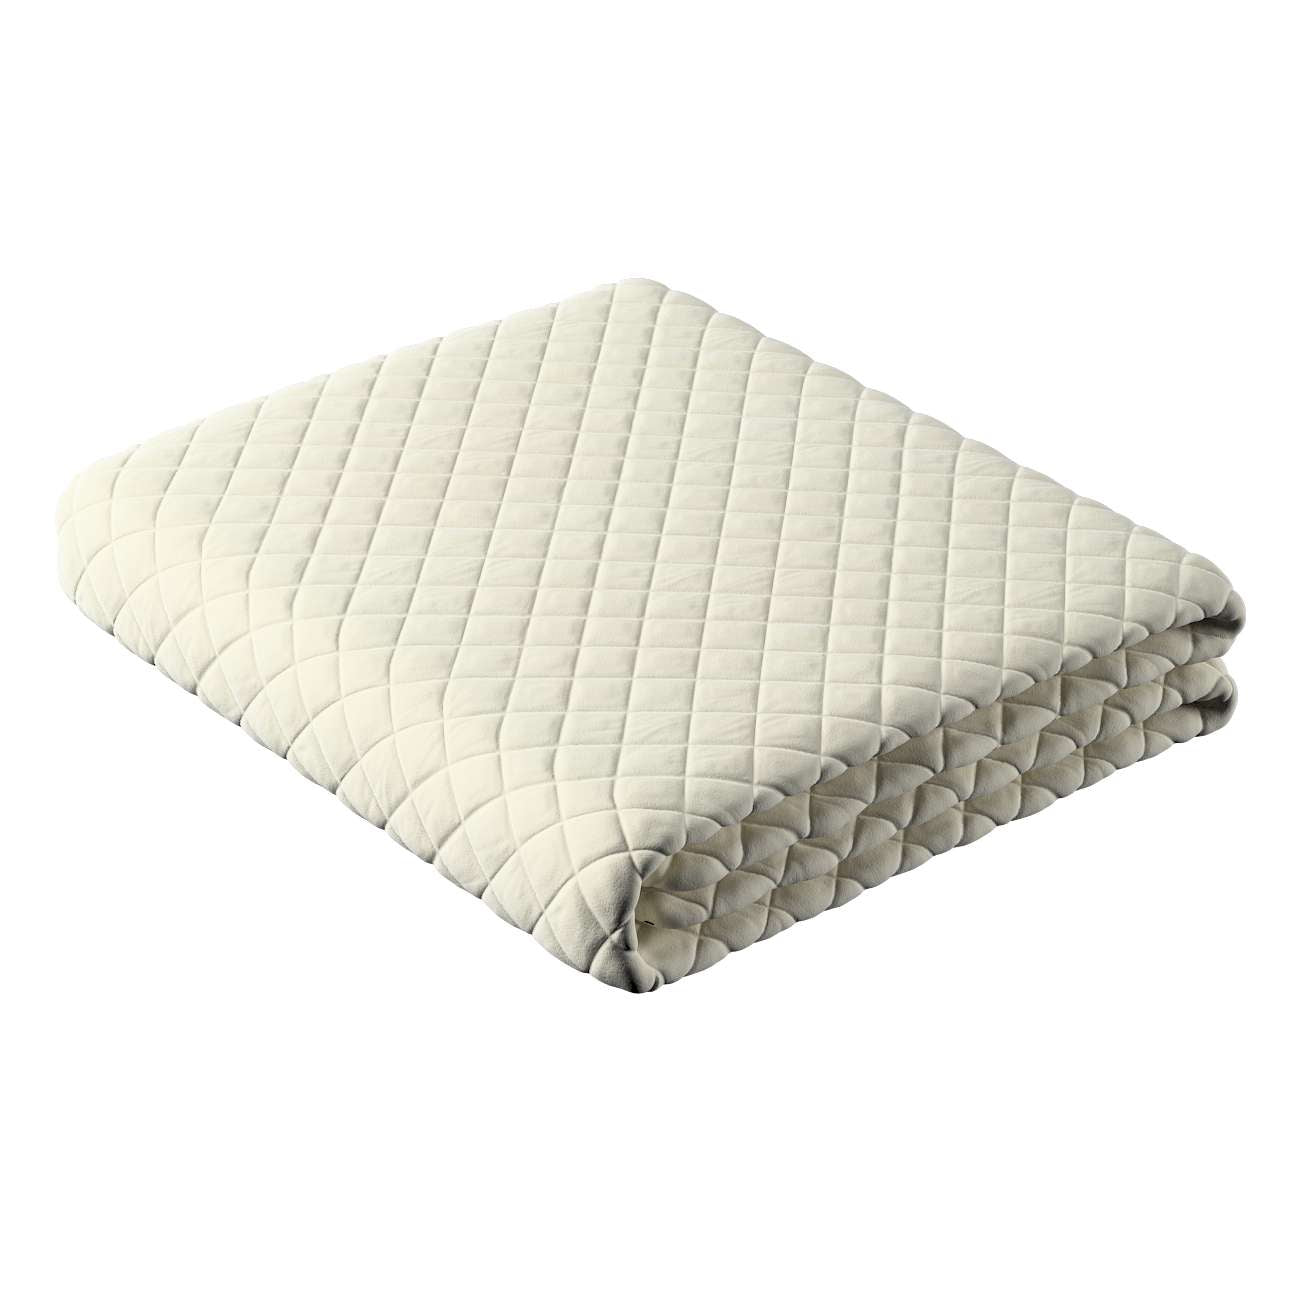 Posh Velvet Bedspread - creamy white